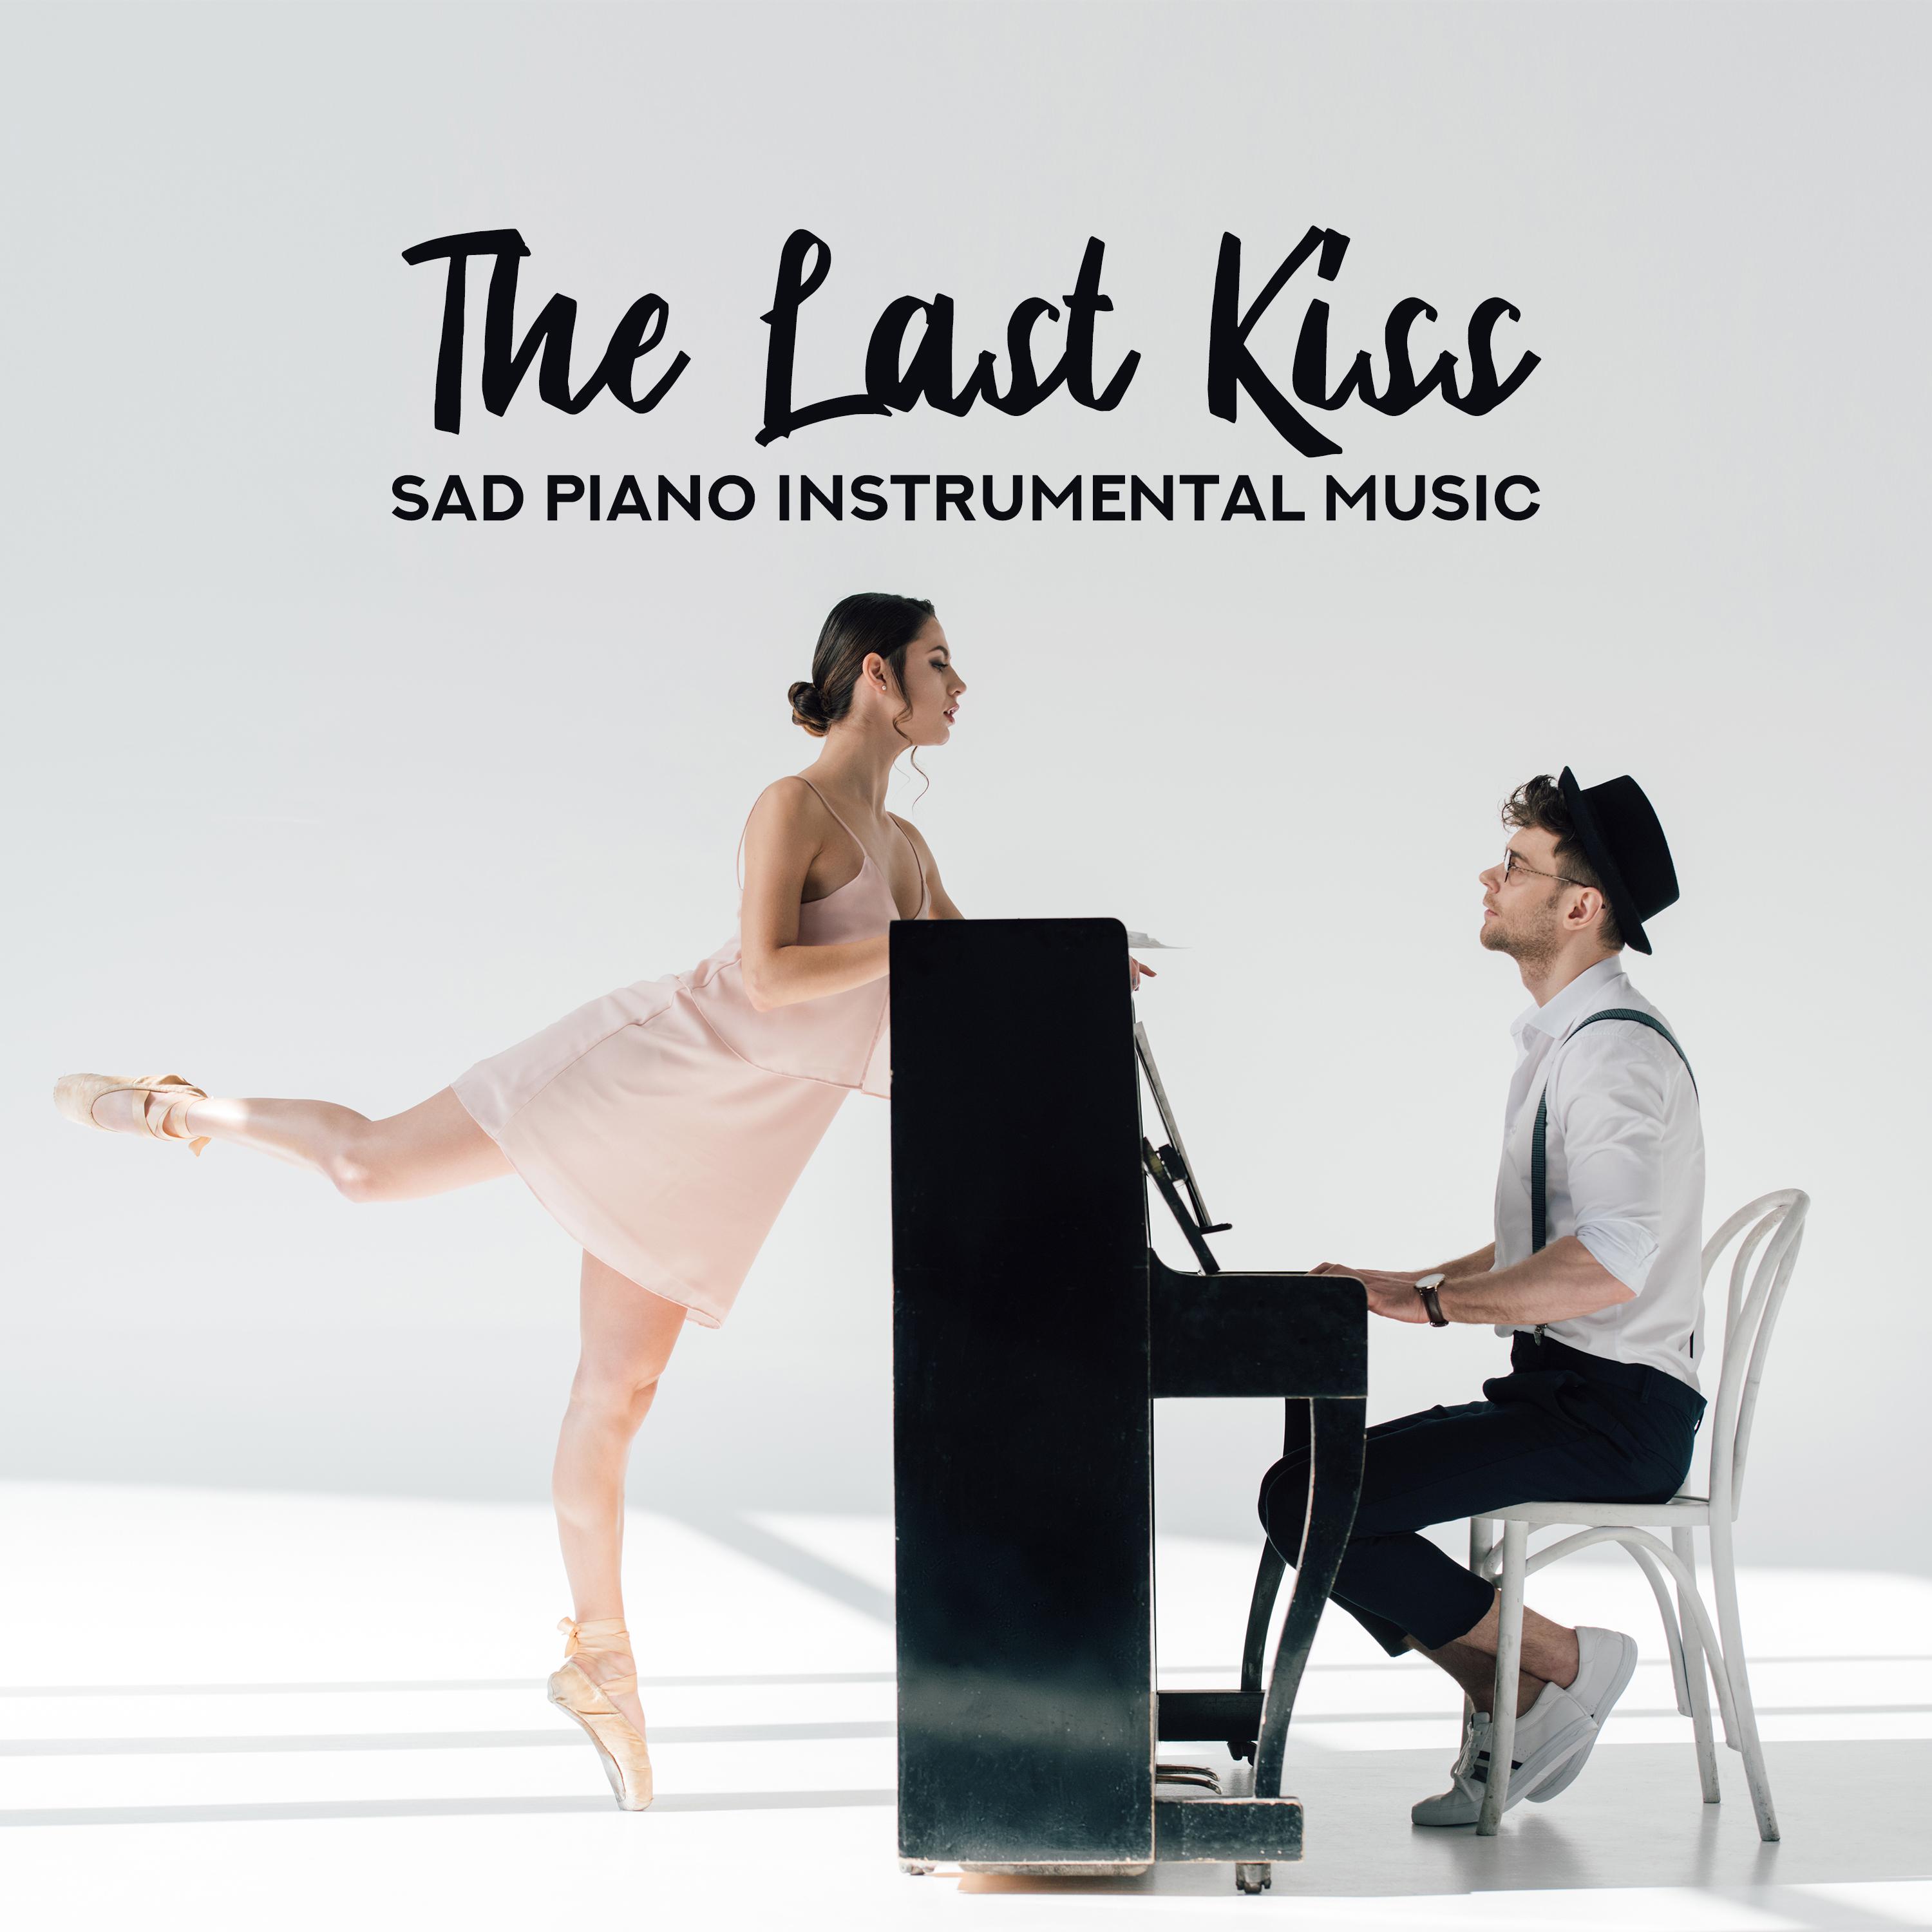 The Last Kiss (Sad Piano Instrumental Music)